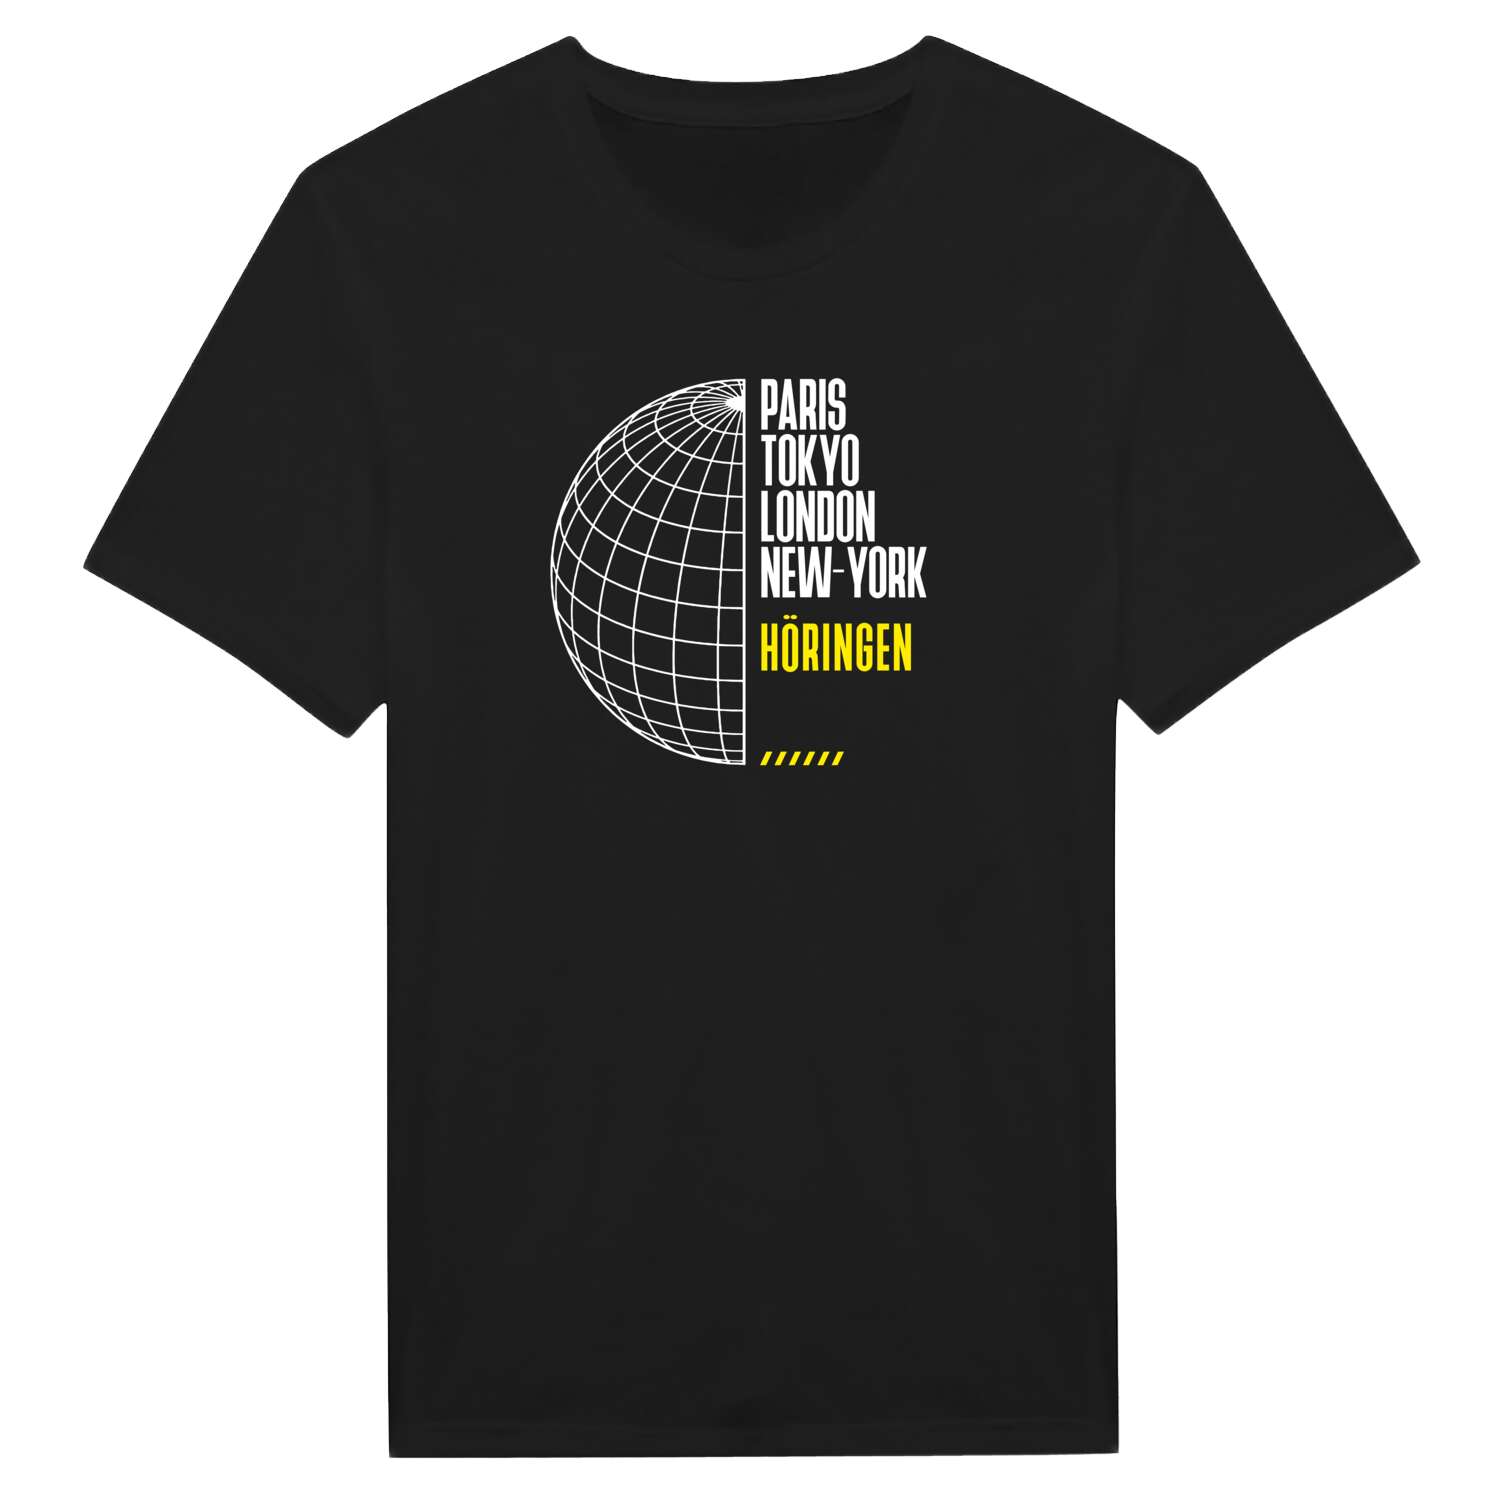 Höringen T-Shirt »Paris Tokyo London«